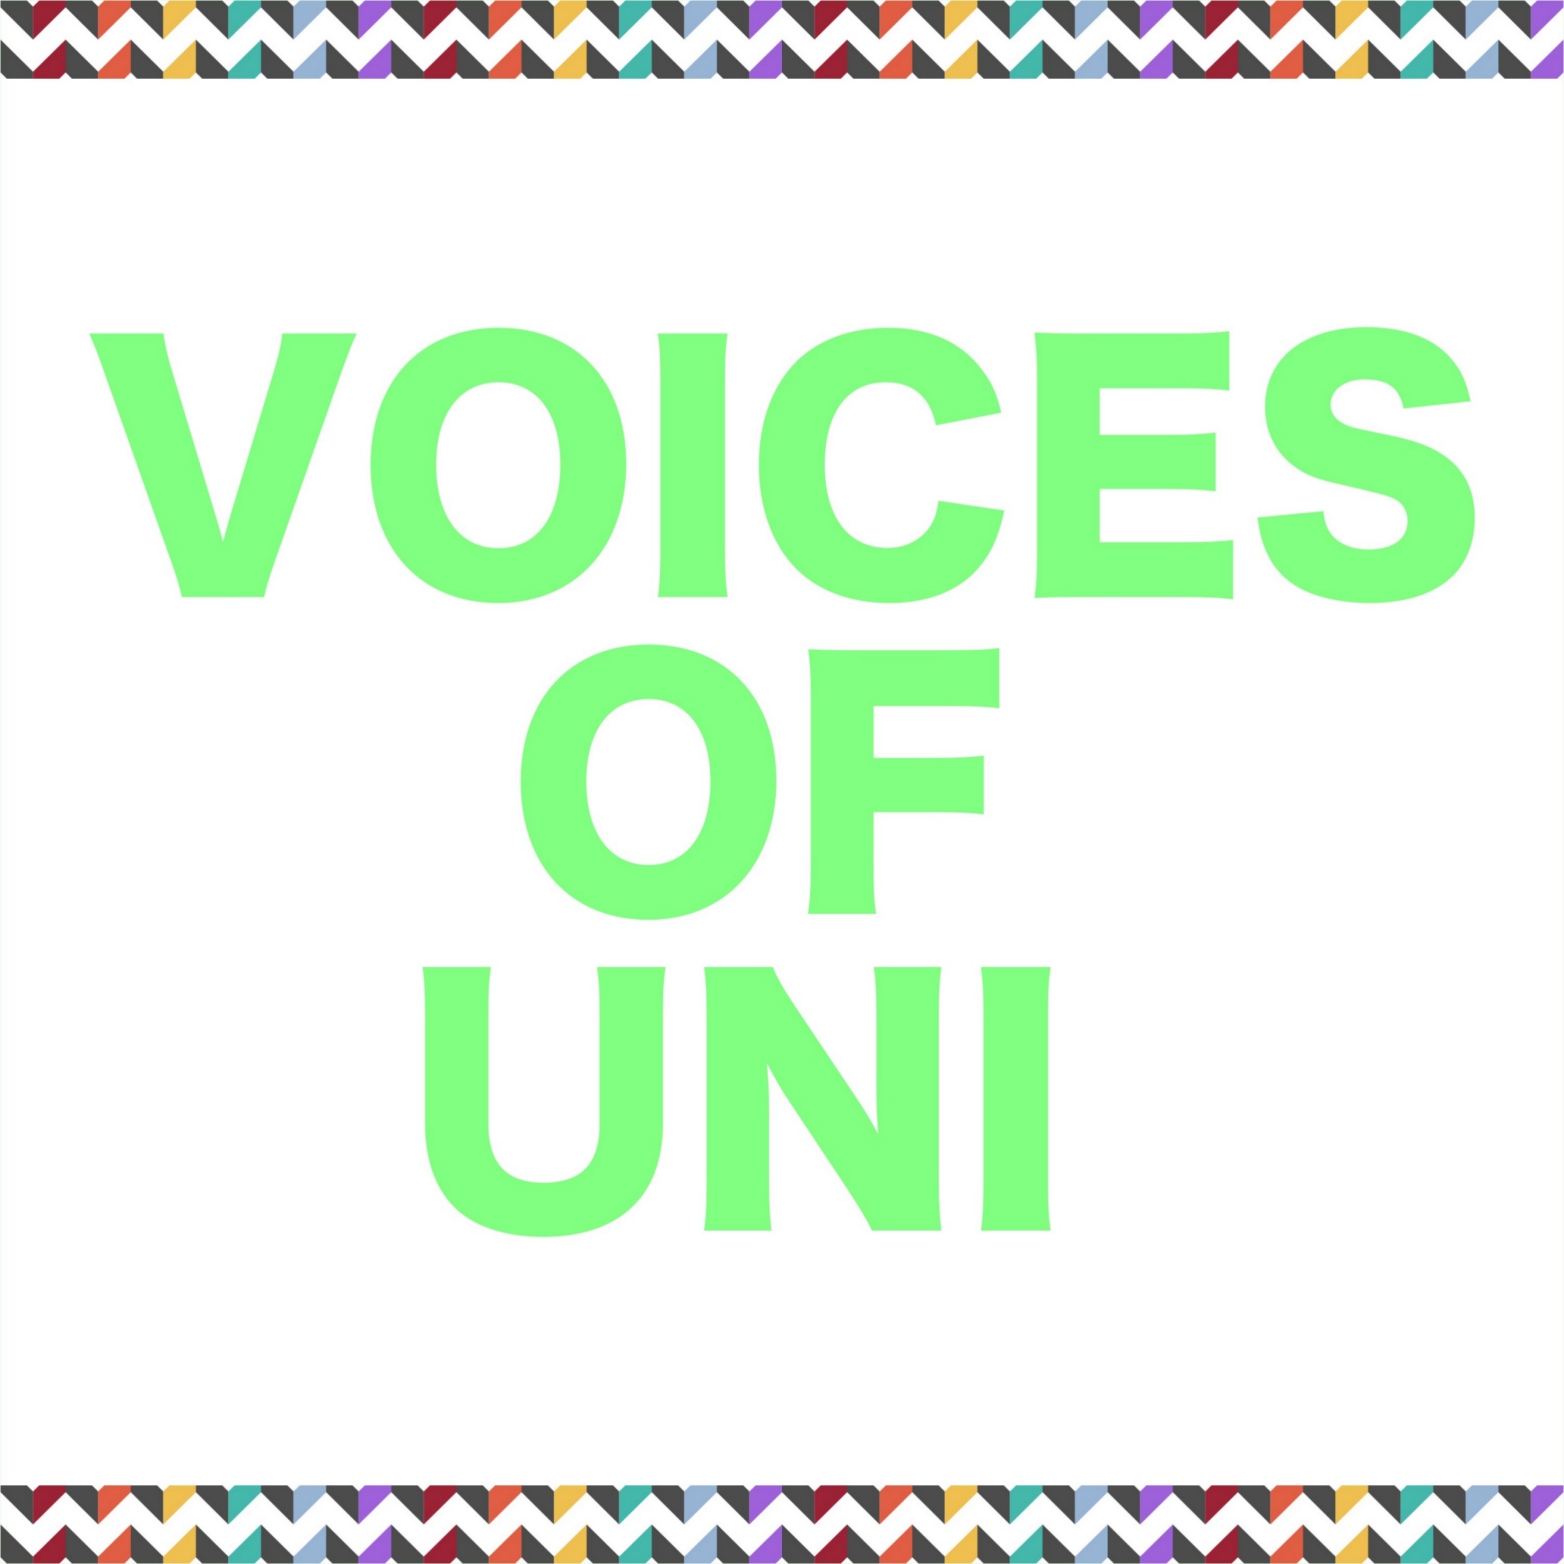 Voices Of Uni